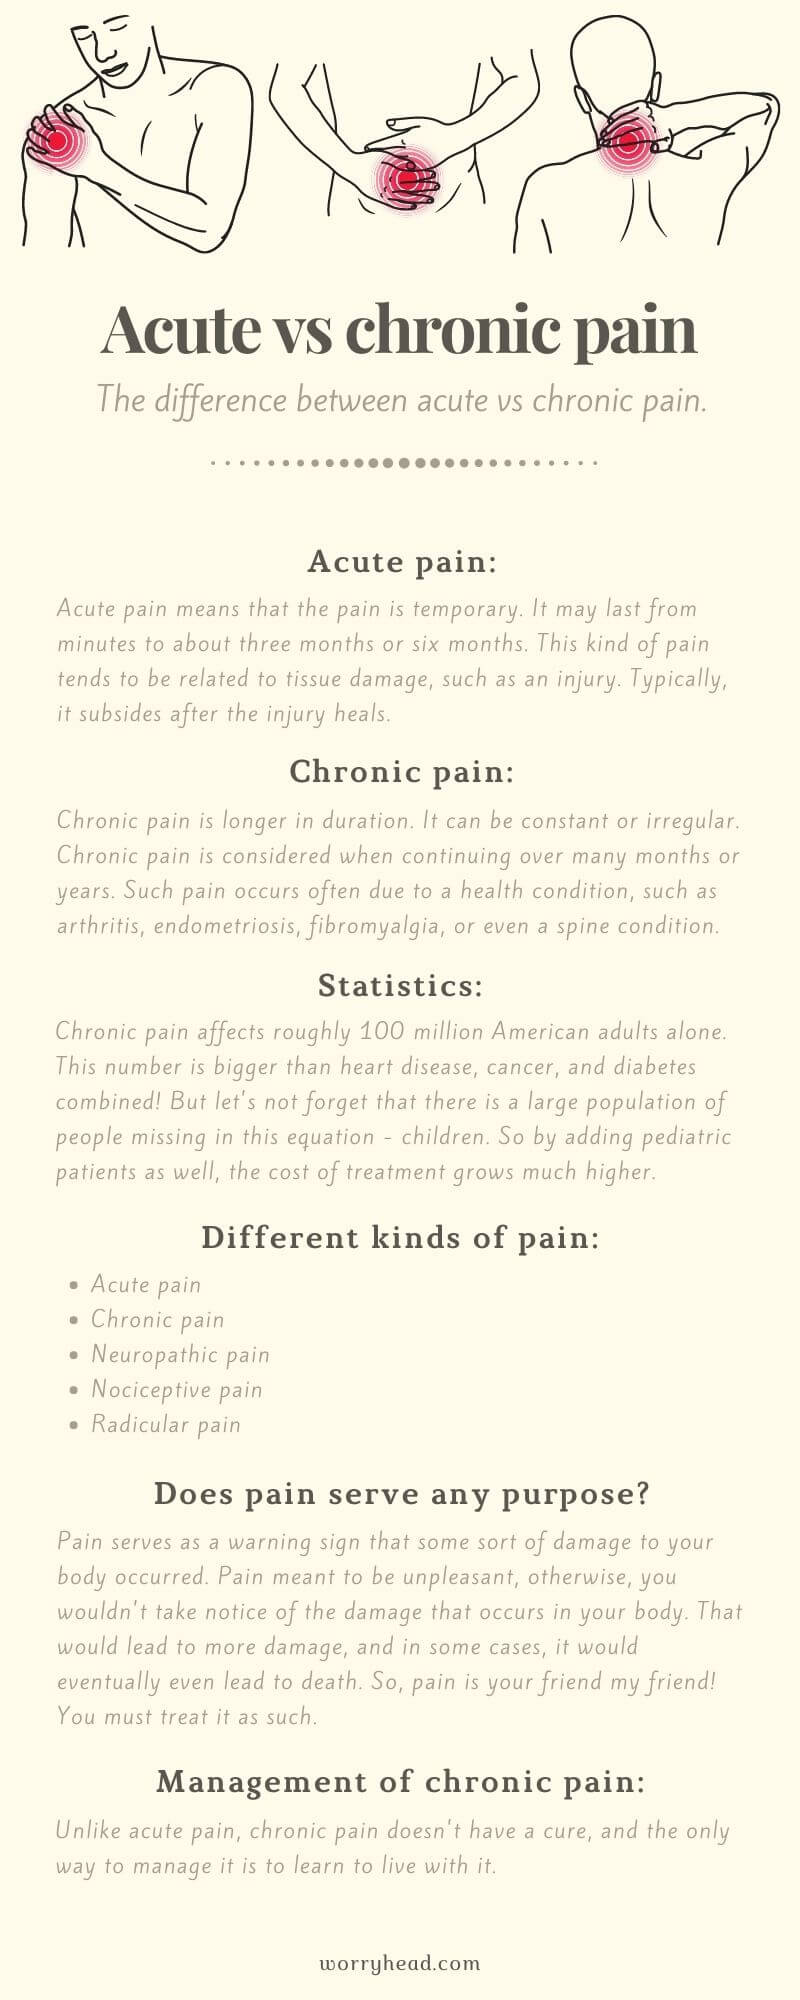 Acute vs chronic pain infographic